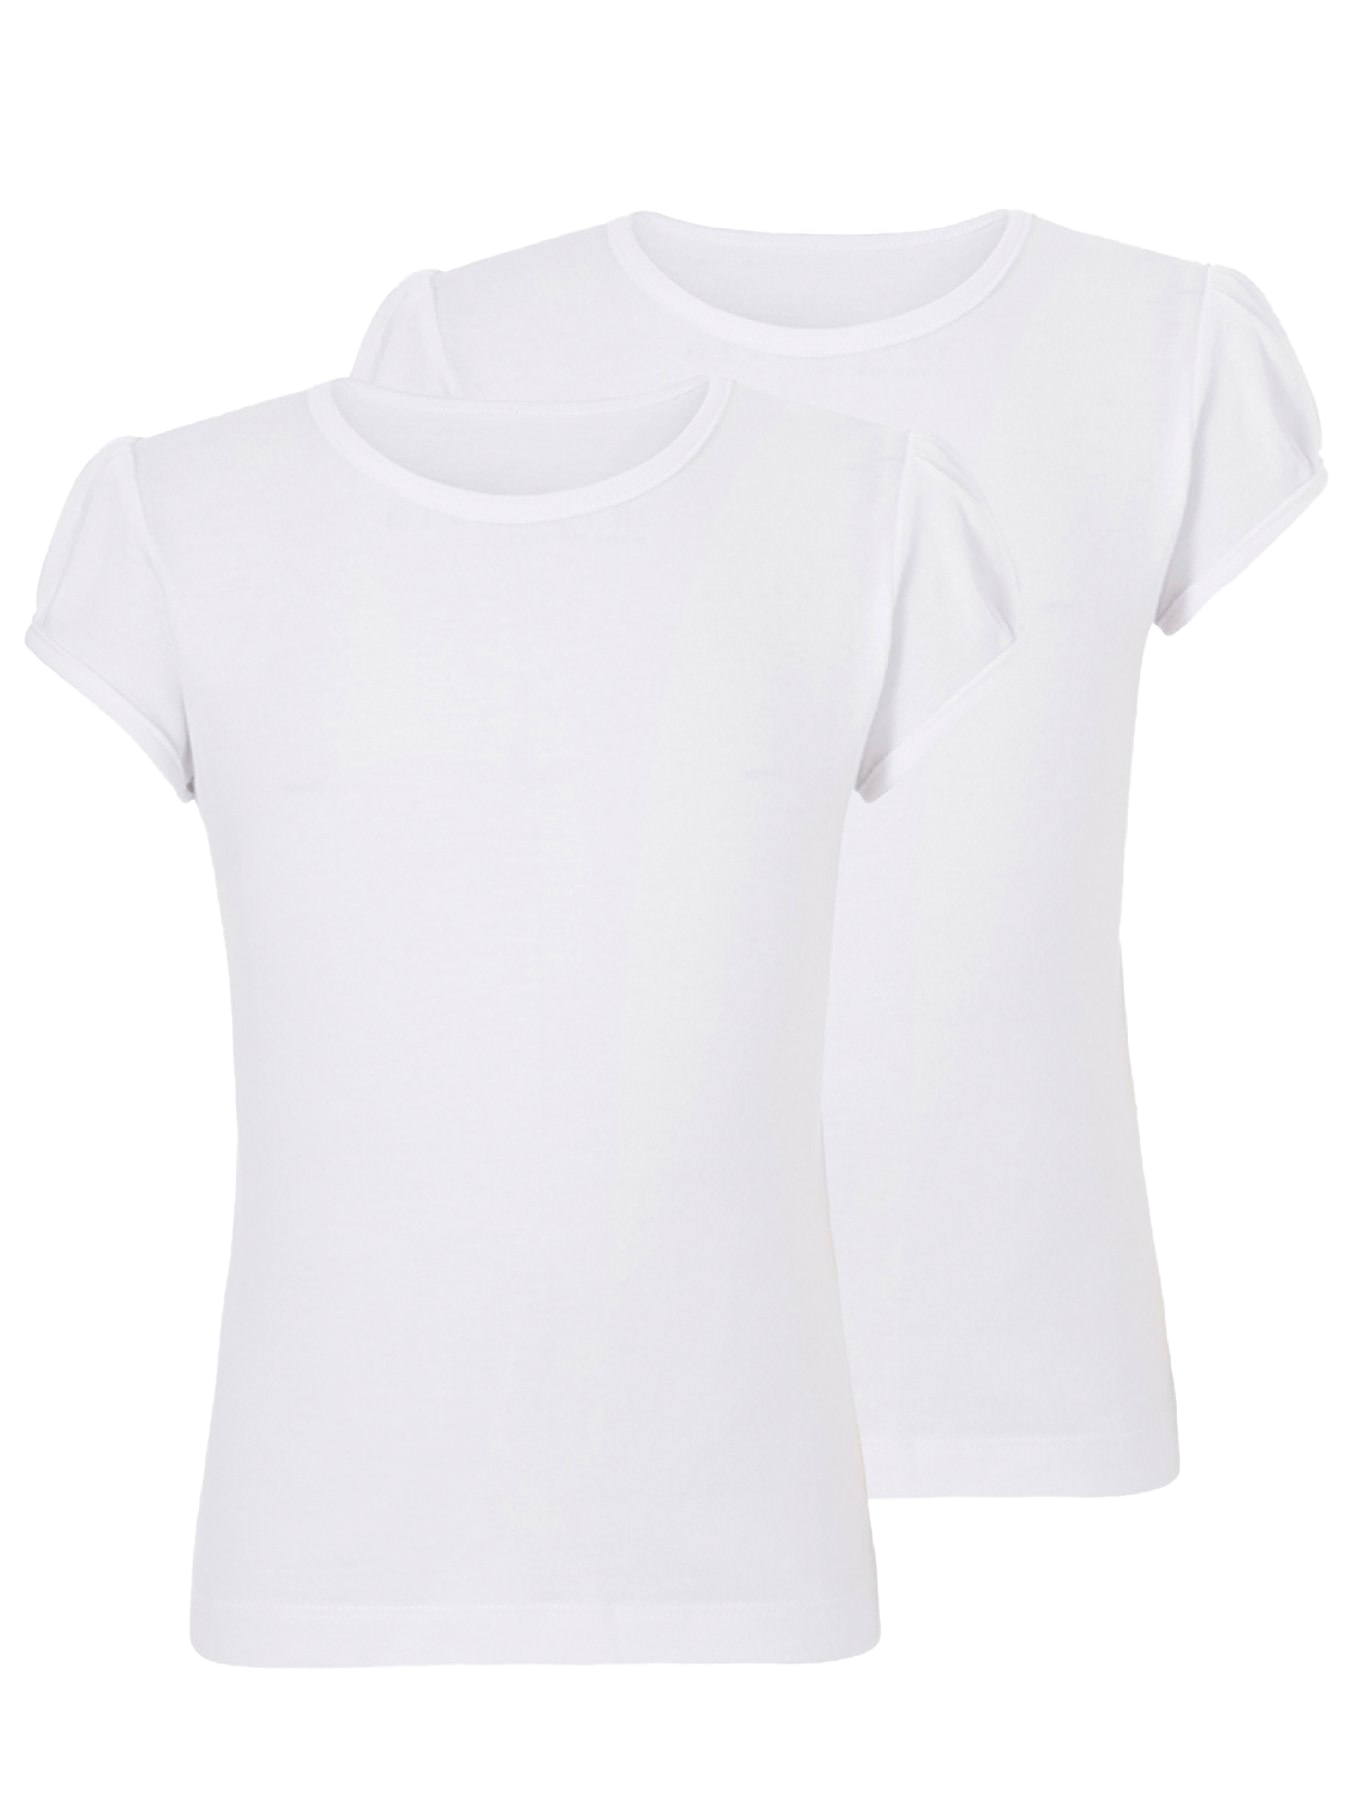 Liso branco t-shirt PNG Baixar imagem